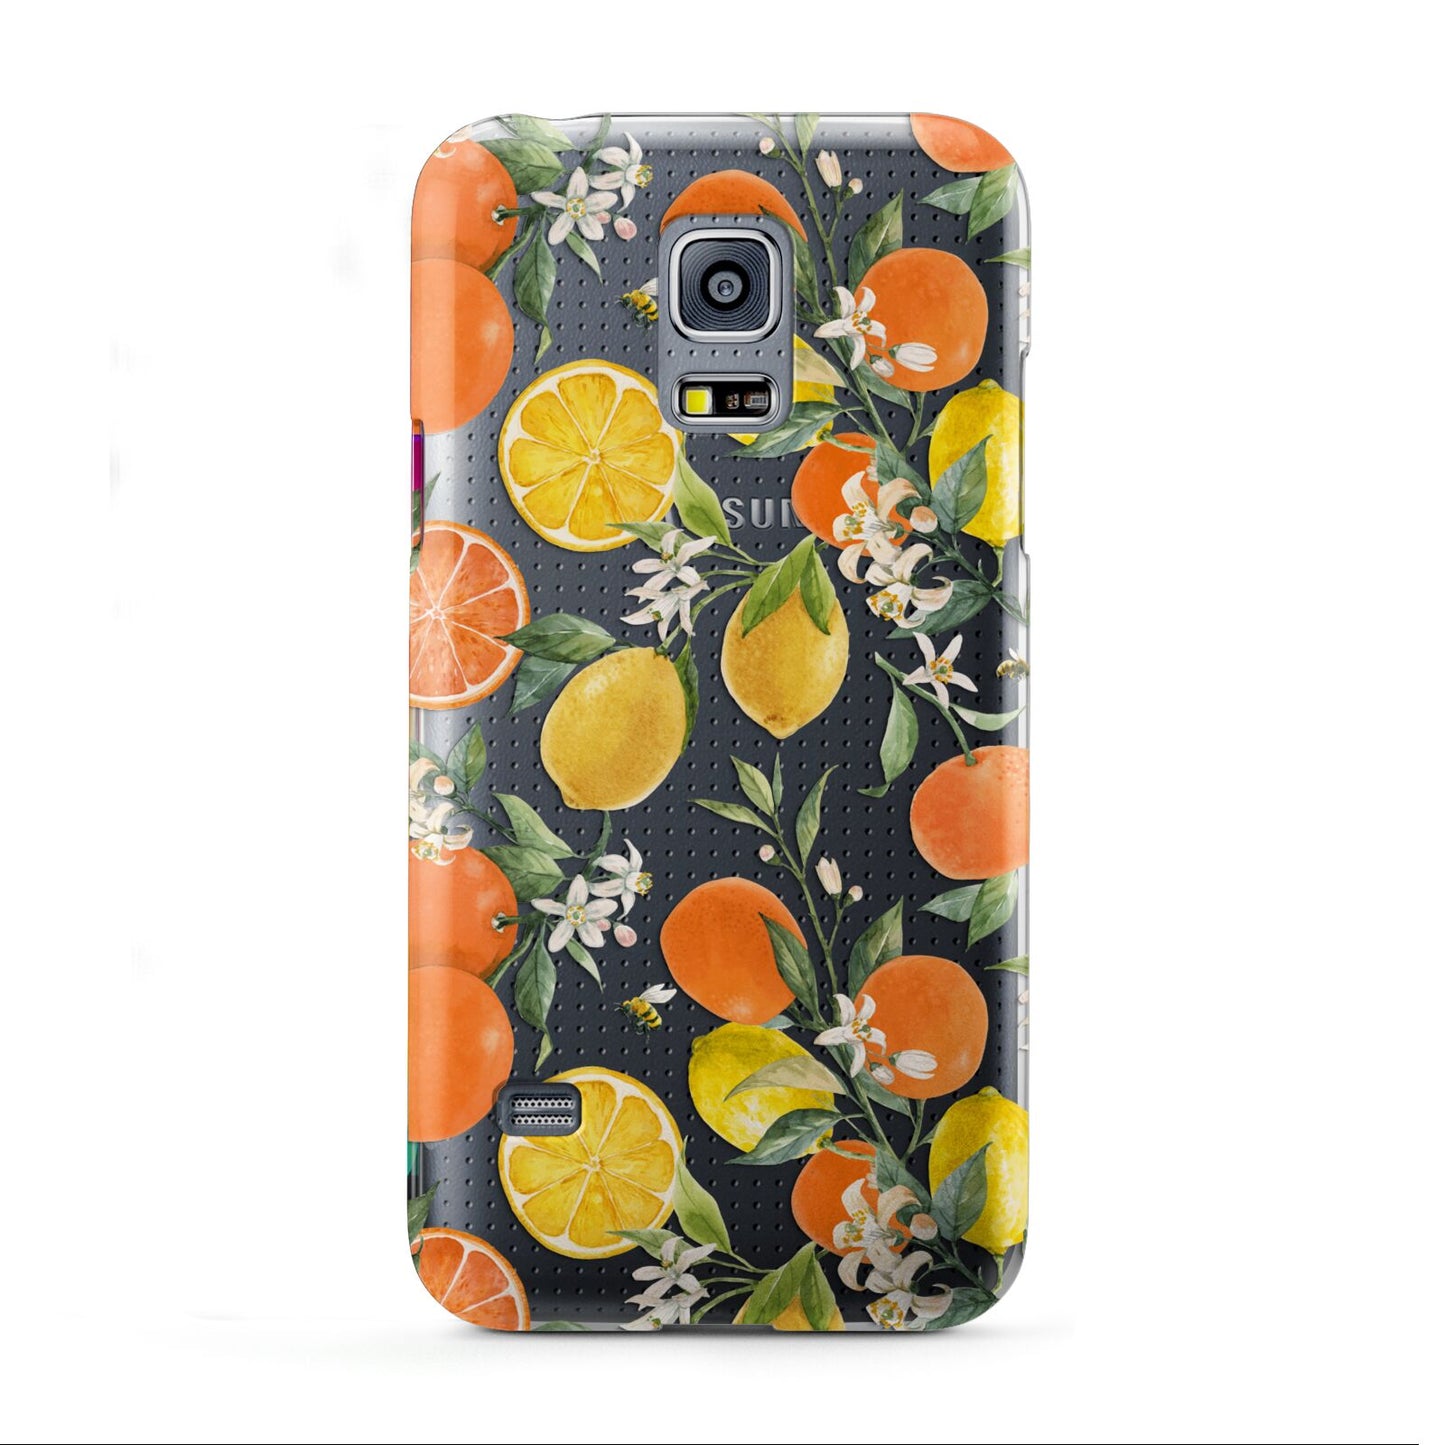 Lemons and Oranges Samsung Galaxy S5 Mini Case